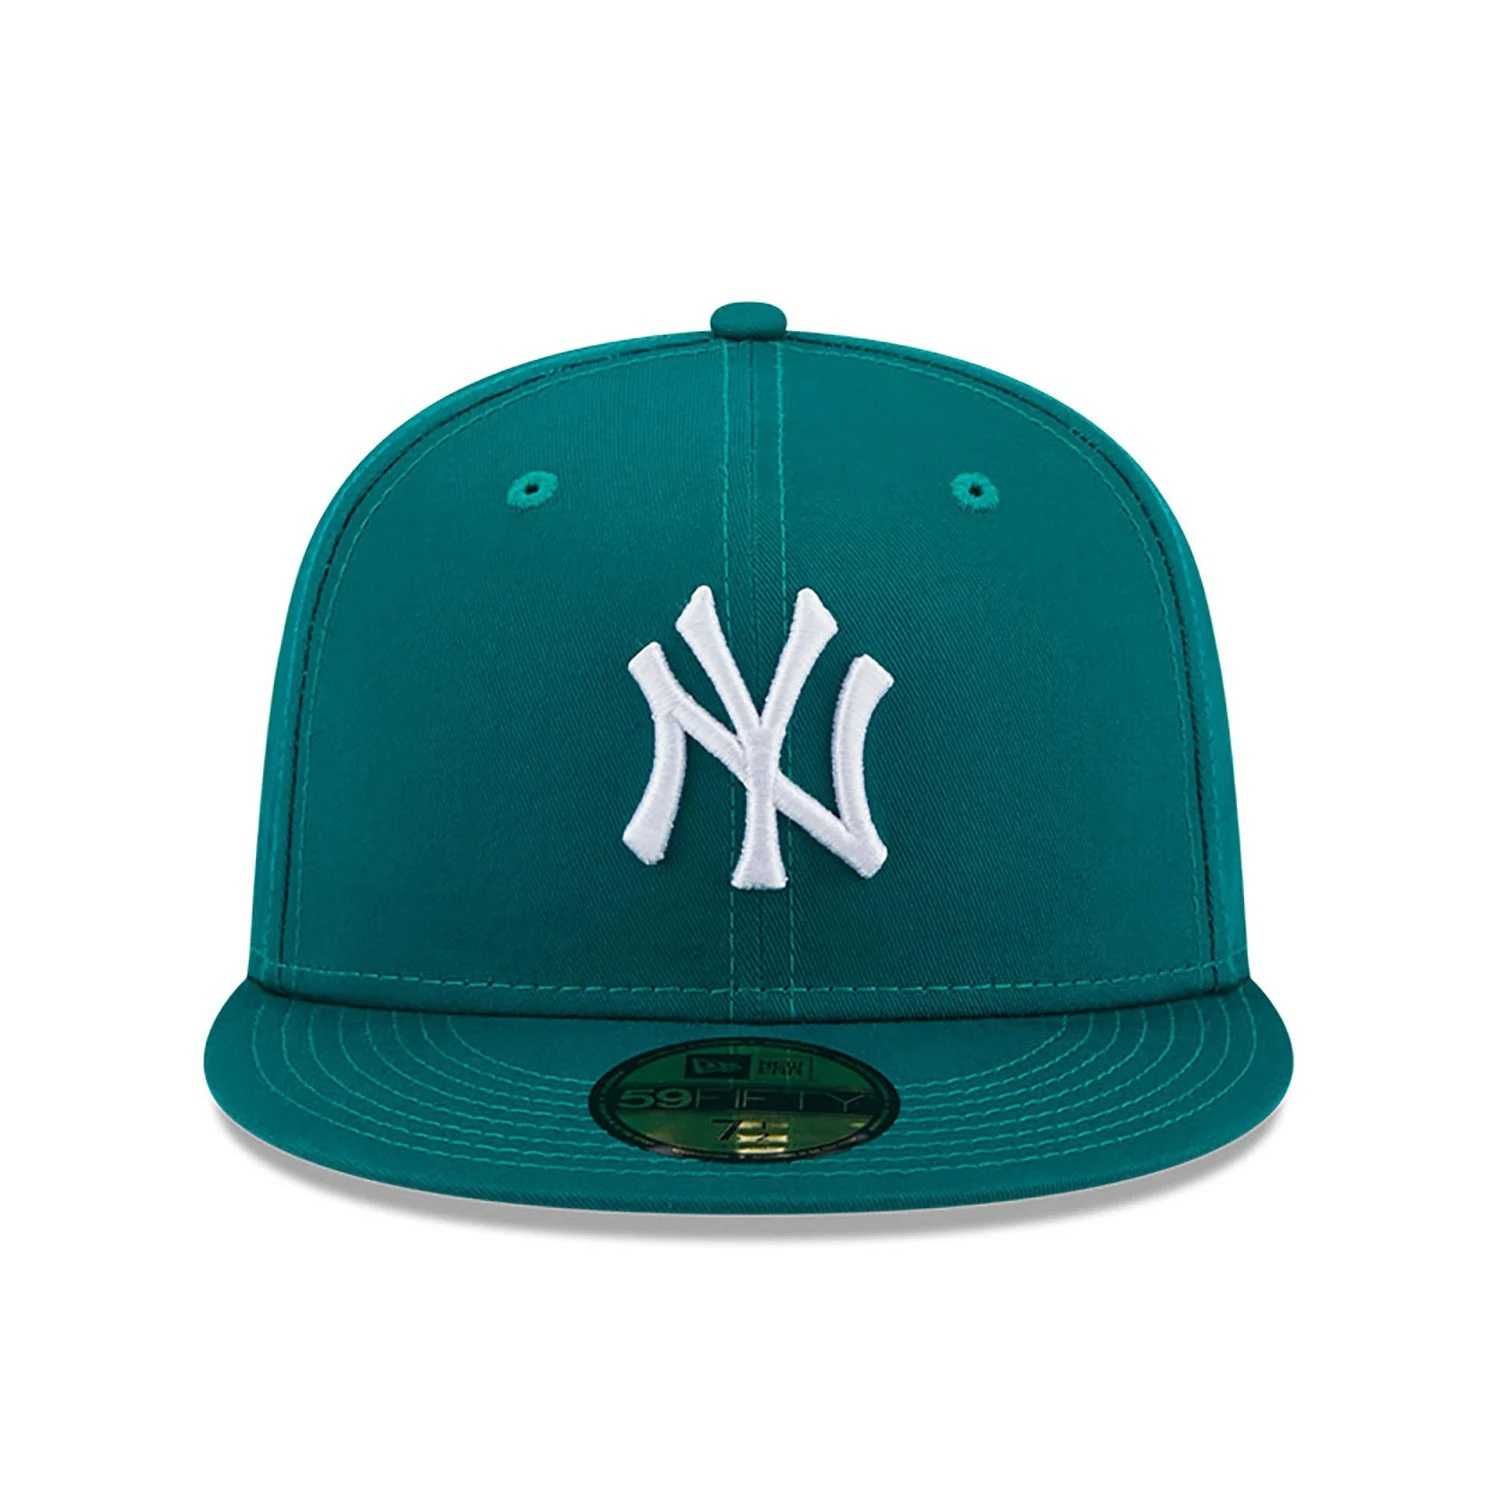 Sapca New Era verde 59fifty league essential new york yankees verde